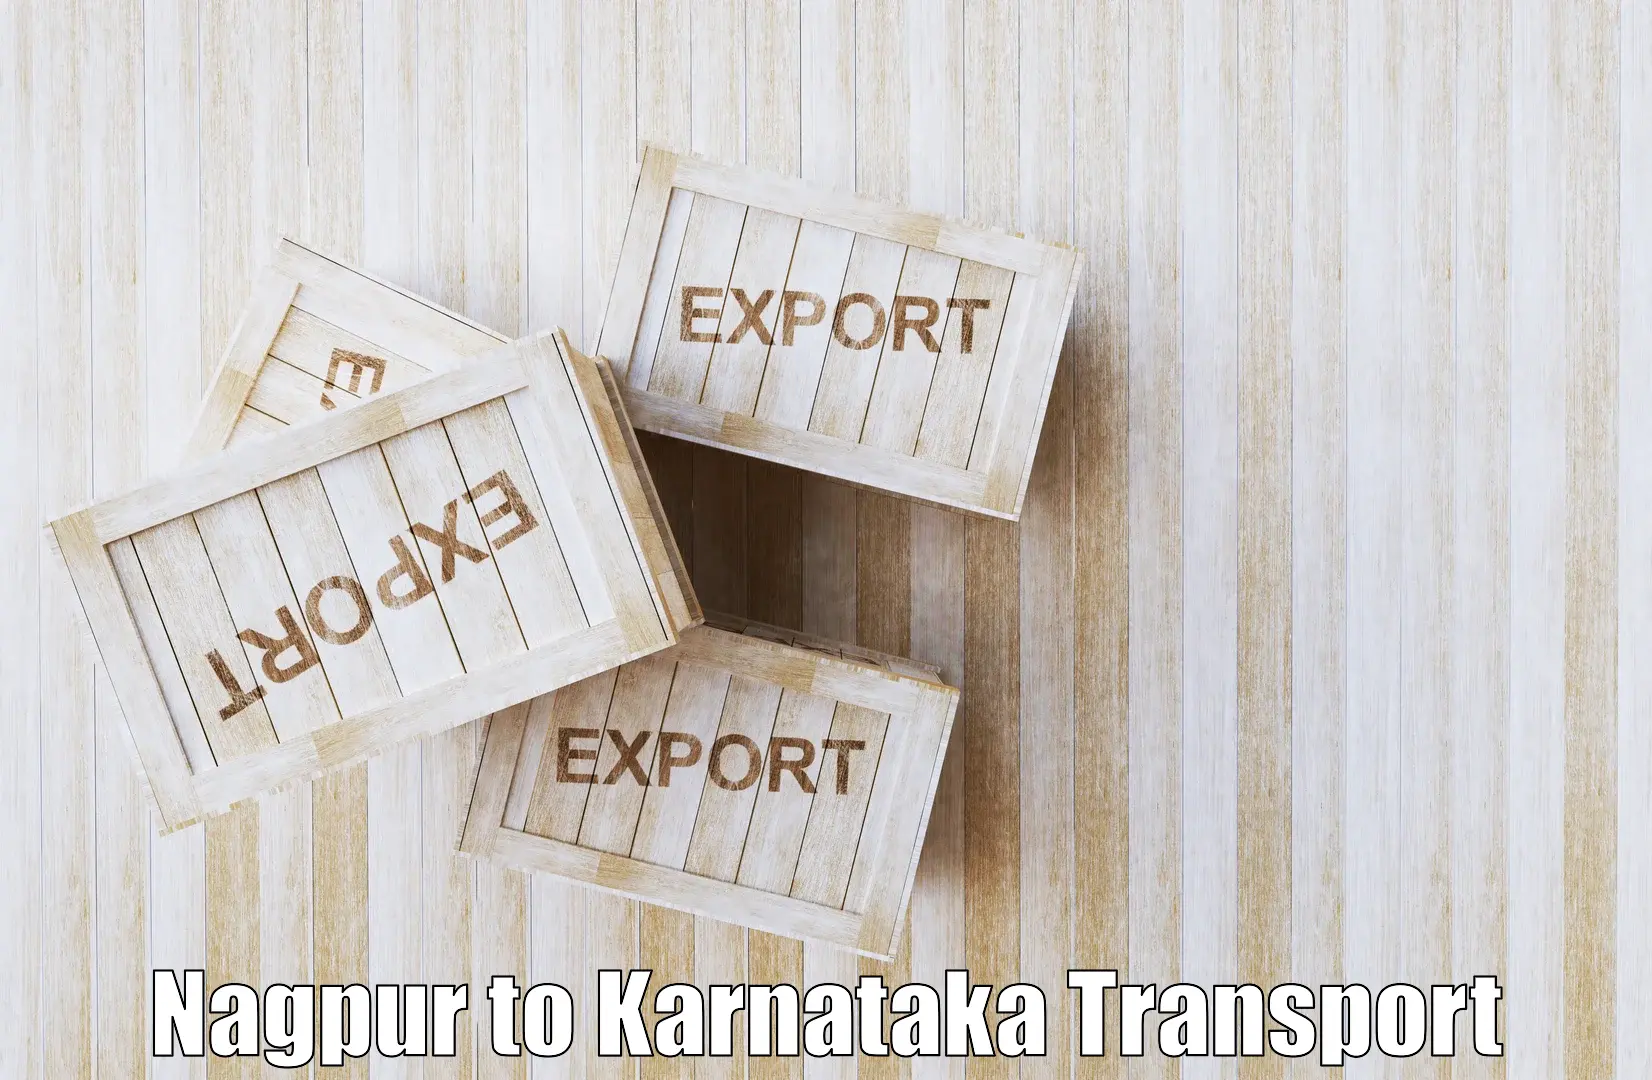 Delivery service Nagpur to Karnataka